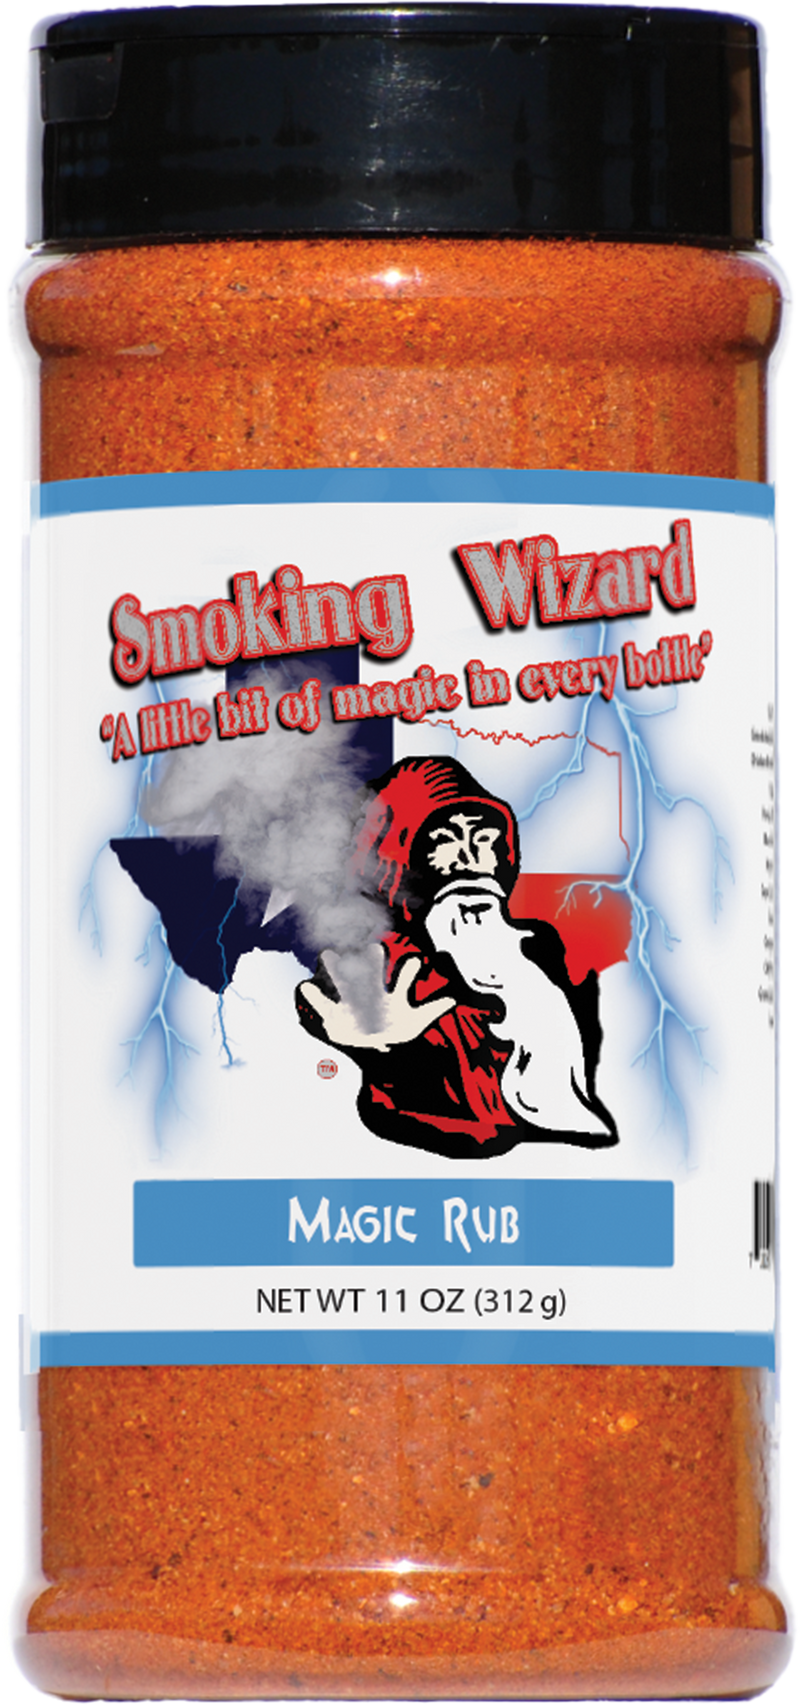 Smoking Wizard Magic Rub